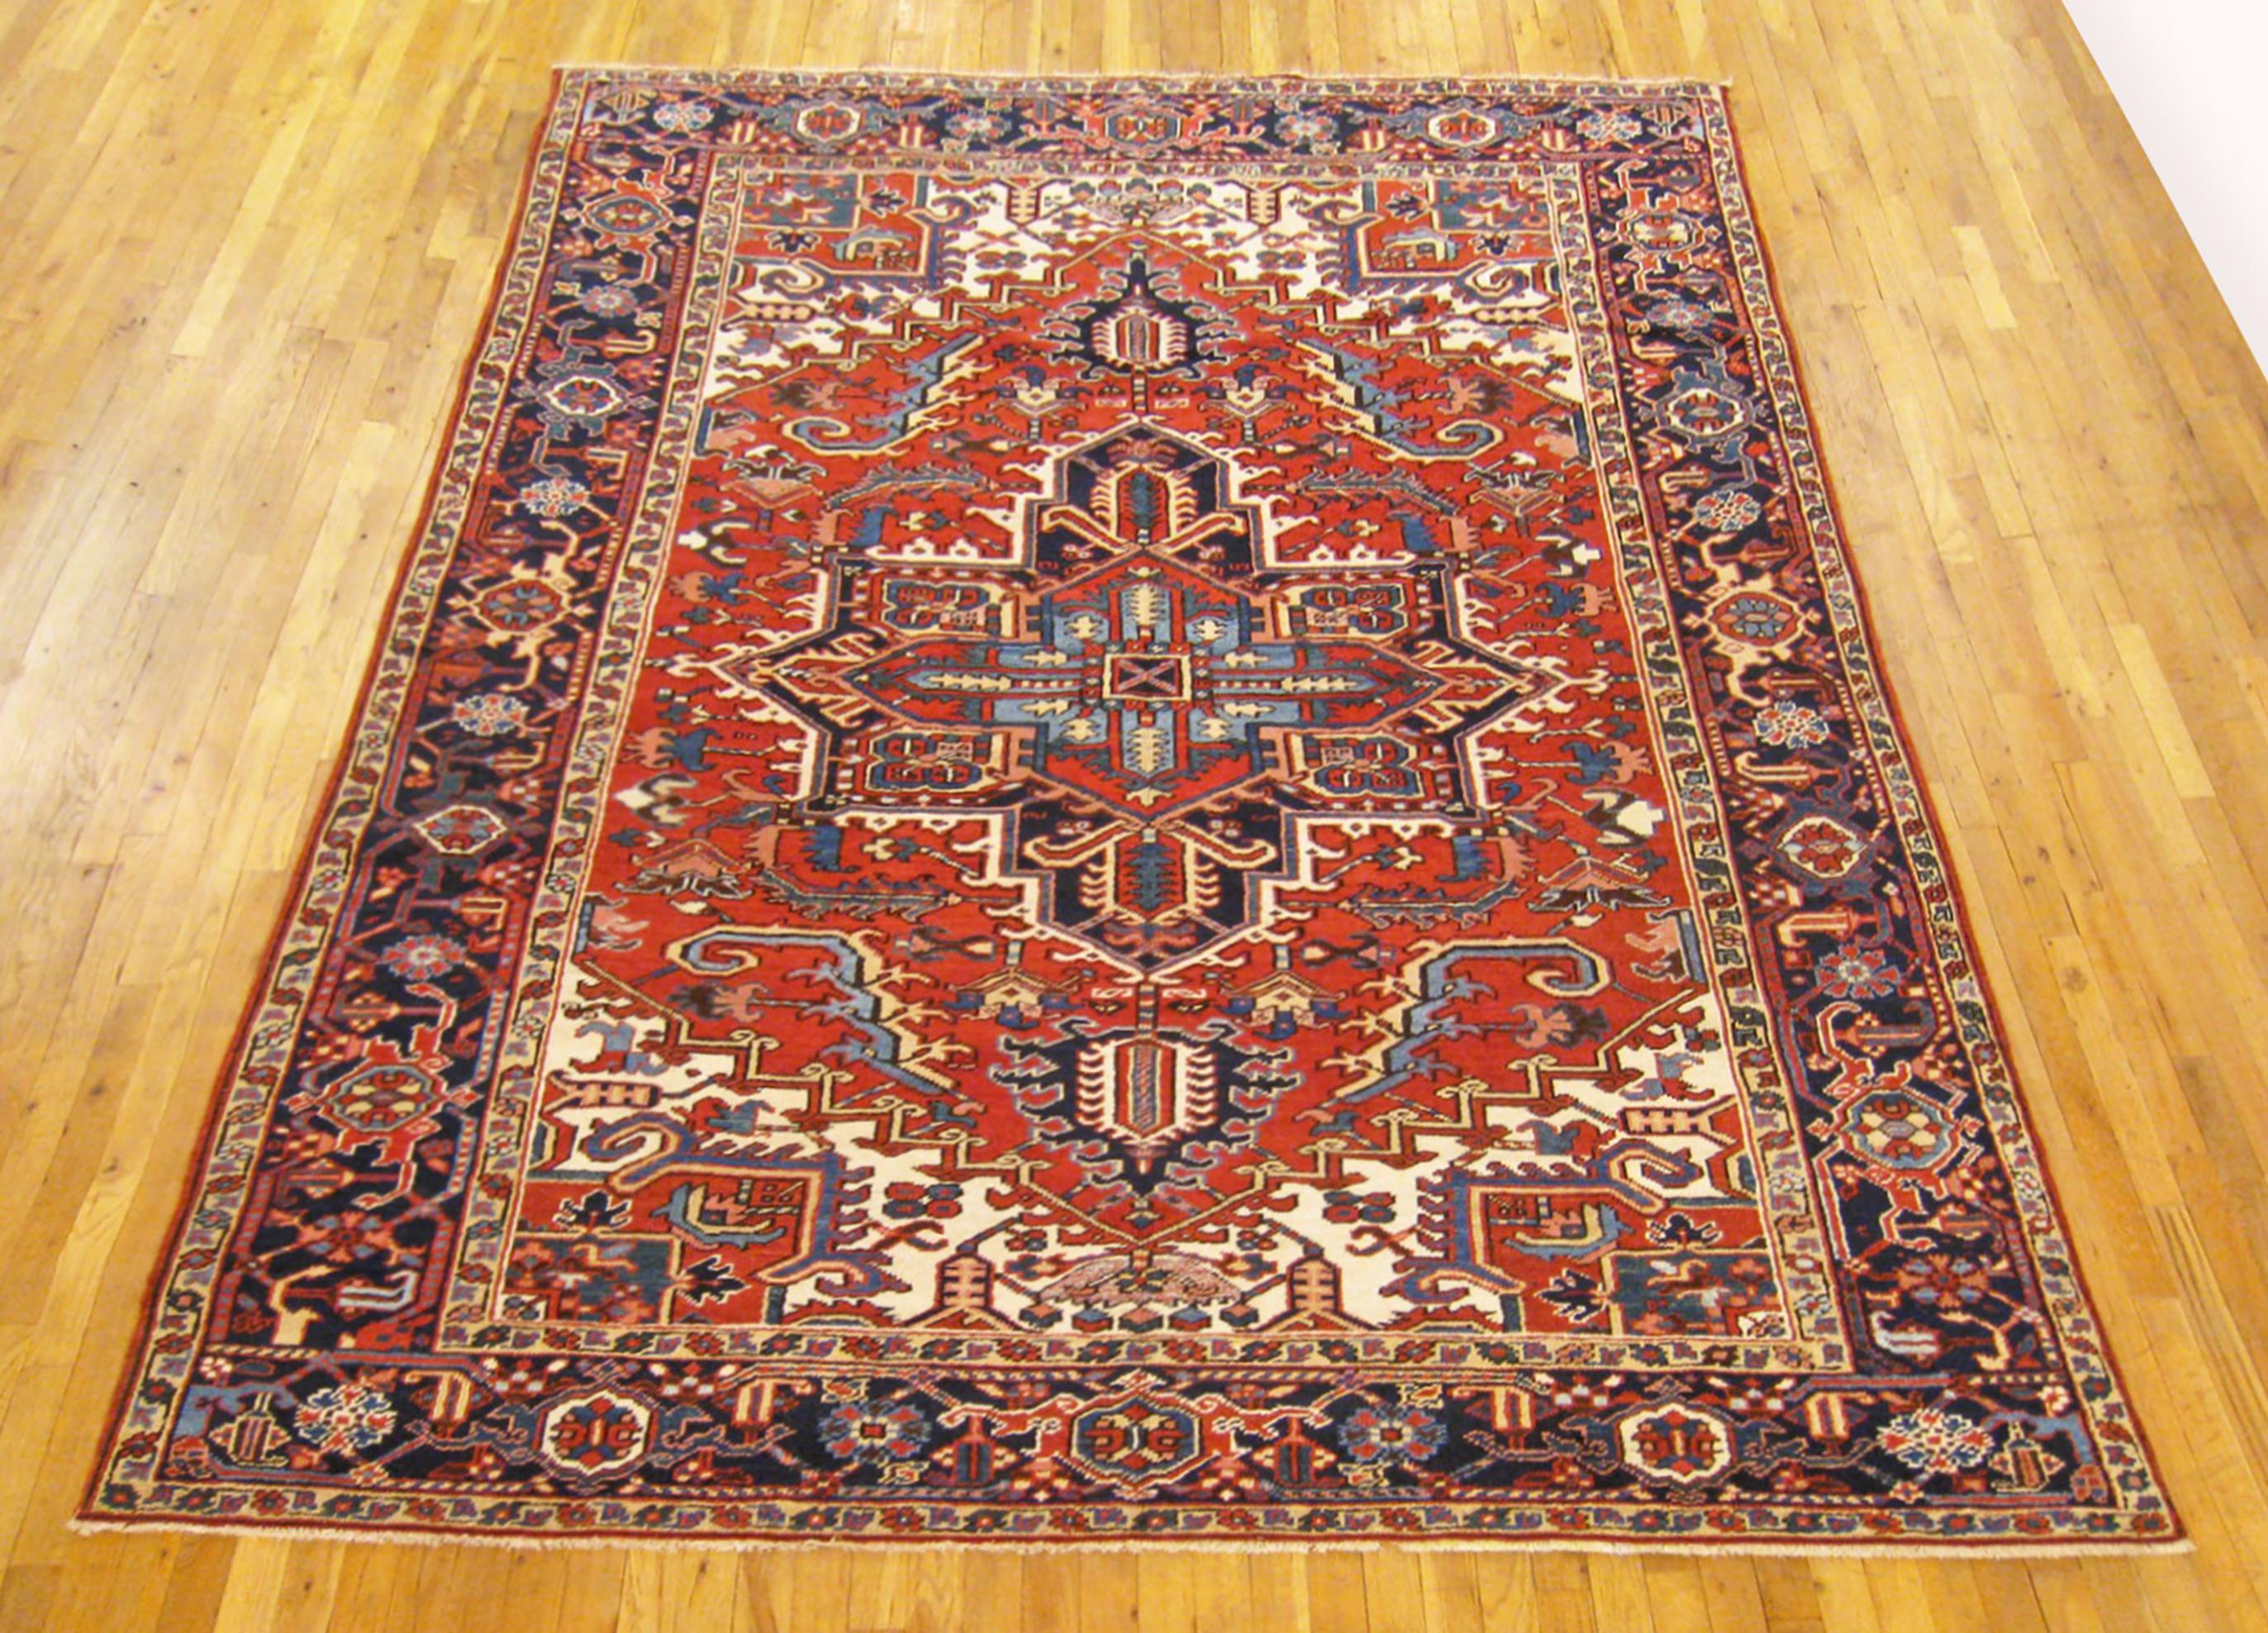 Vintage Persian Heriz Oriental rug, room size

A vintage Persian Heriz oriental rug, size 10'0